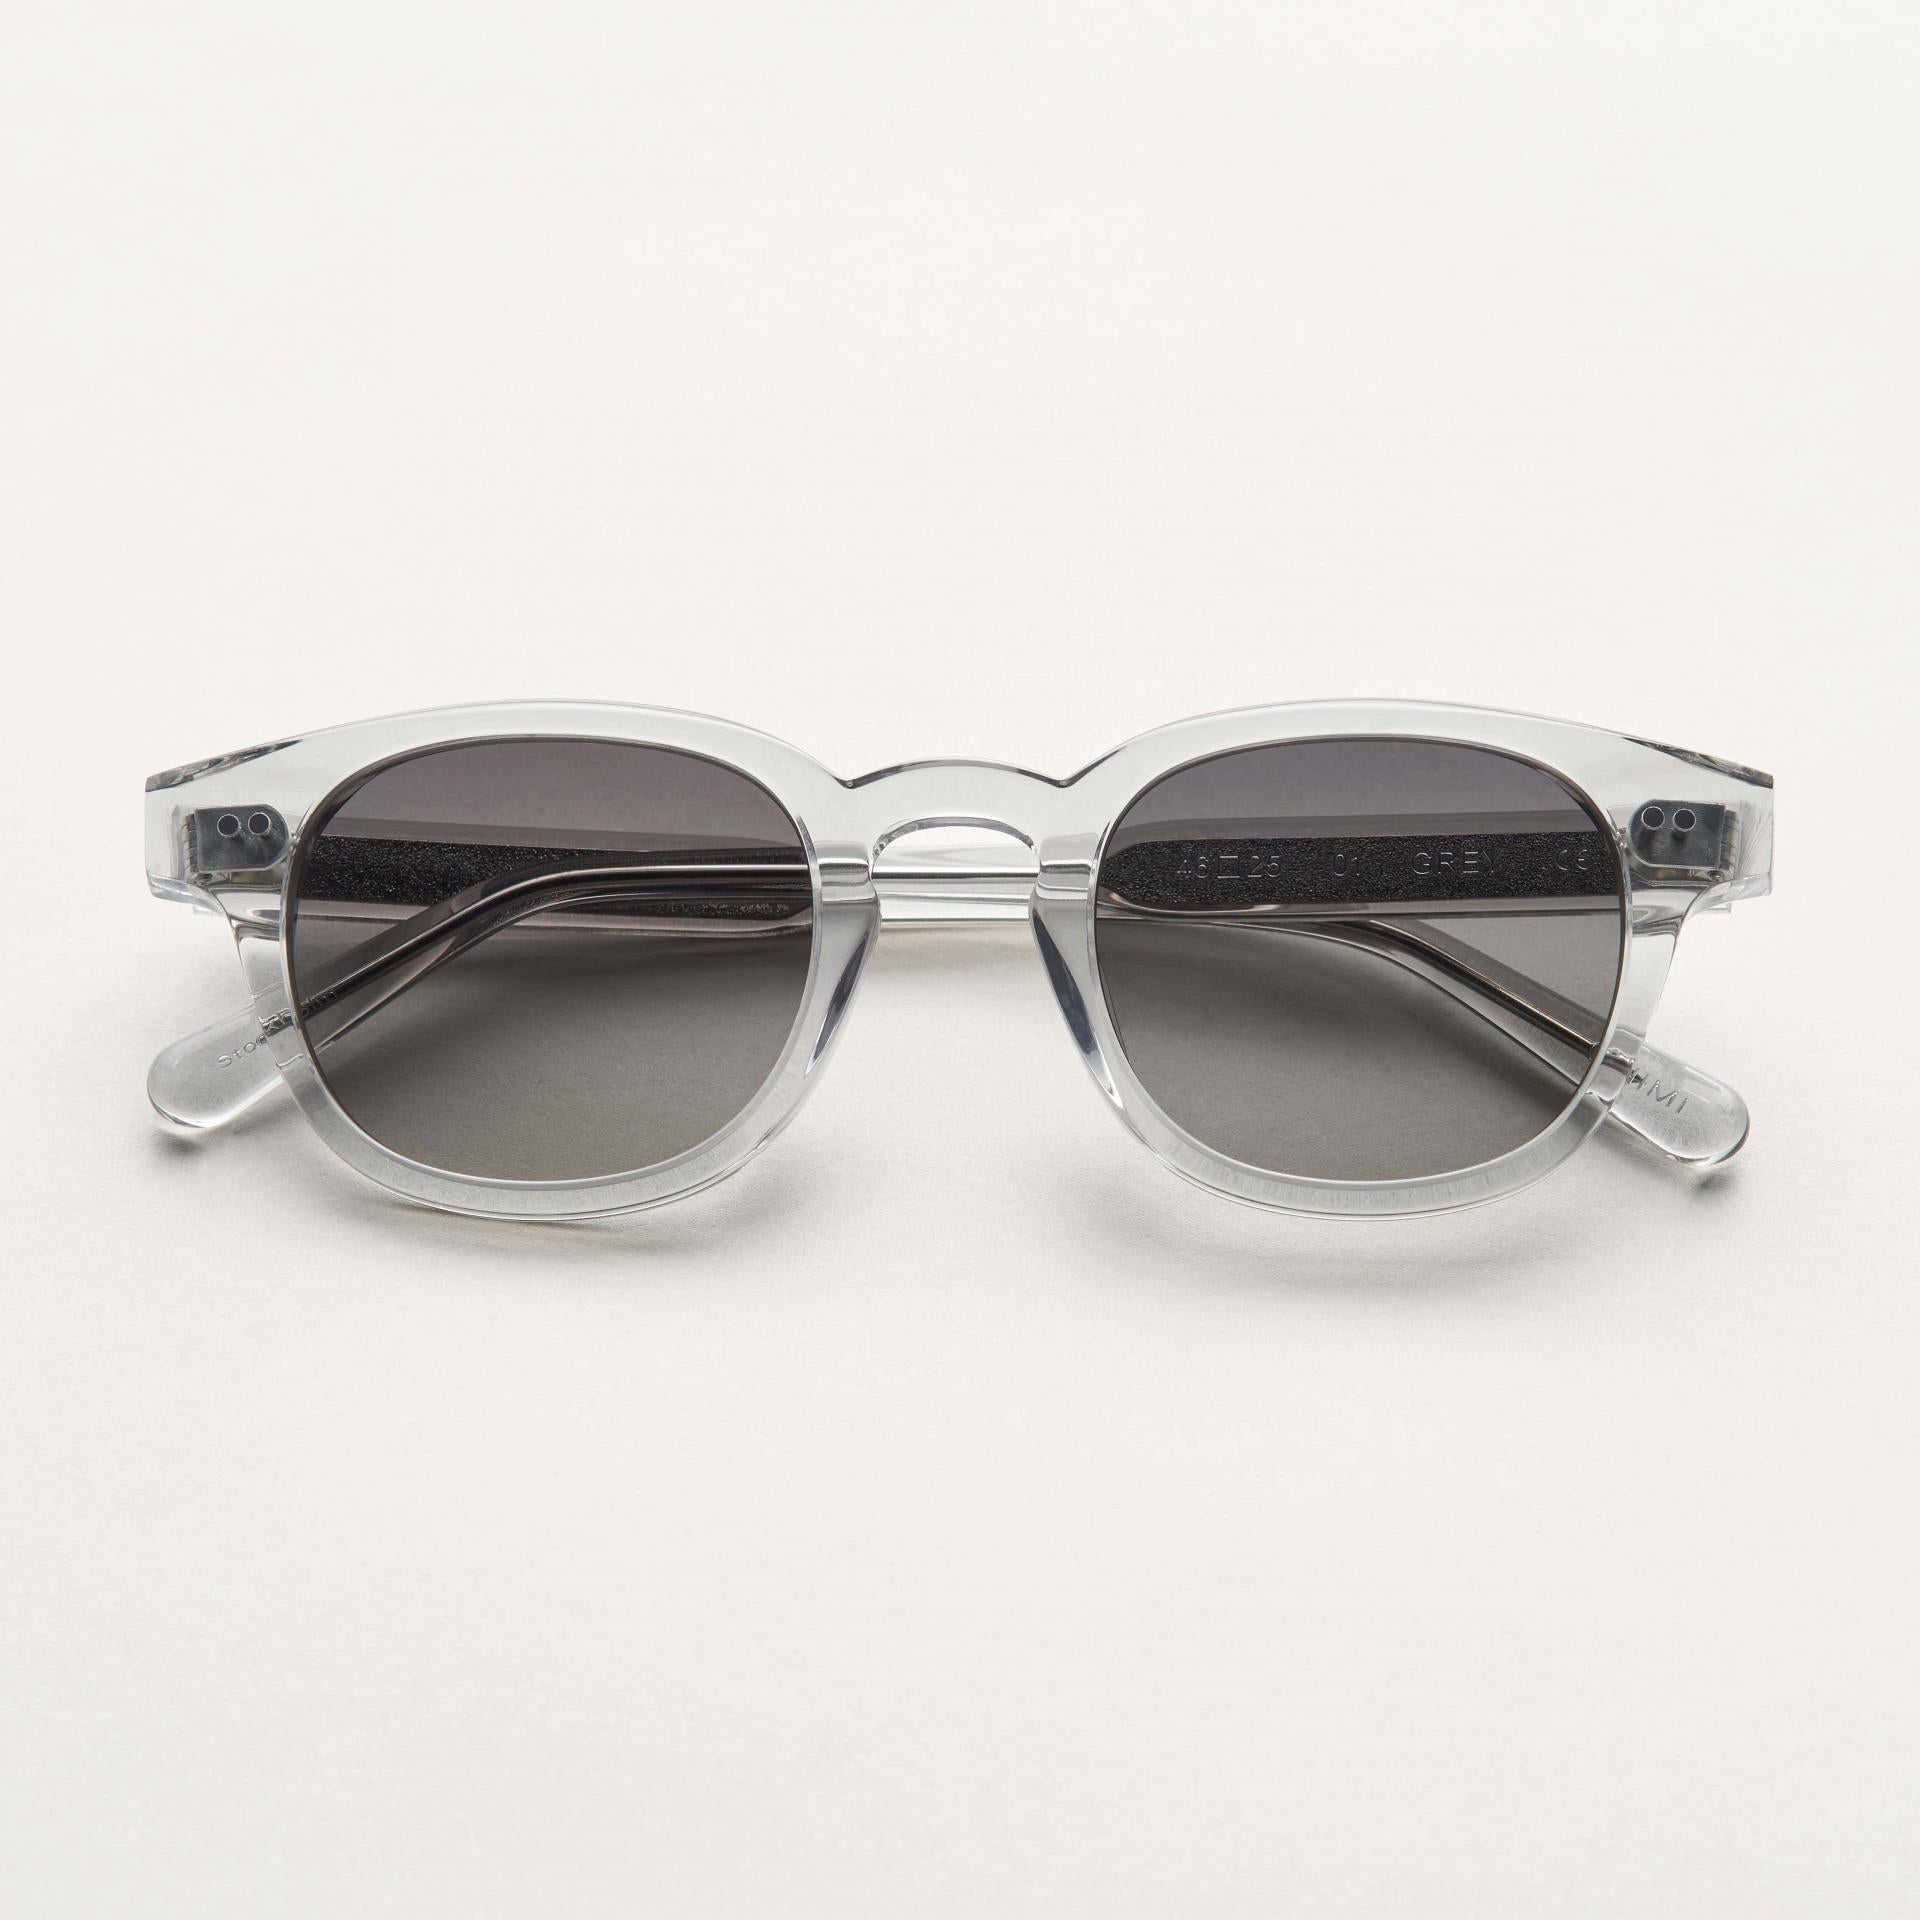 Chimi Sonnenbrille Modell 01 Grey